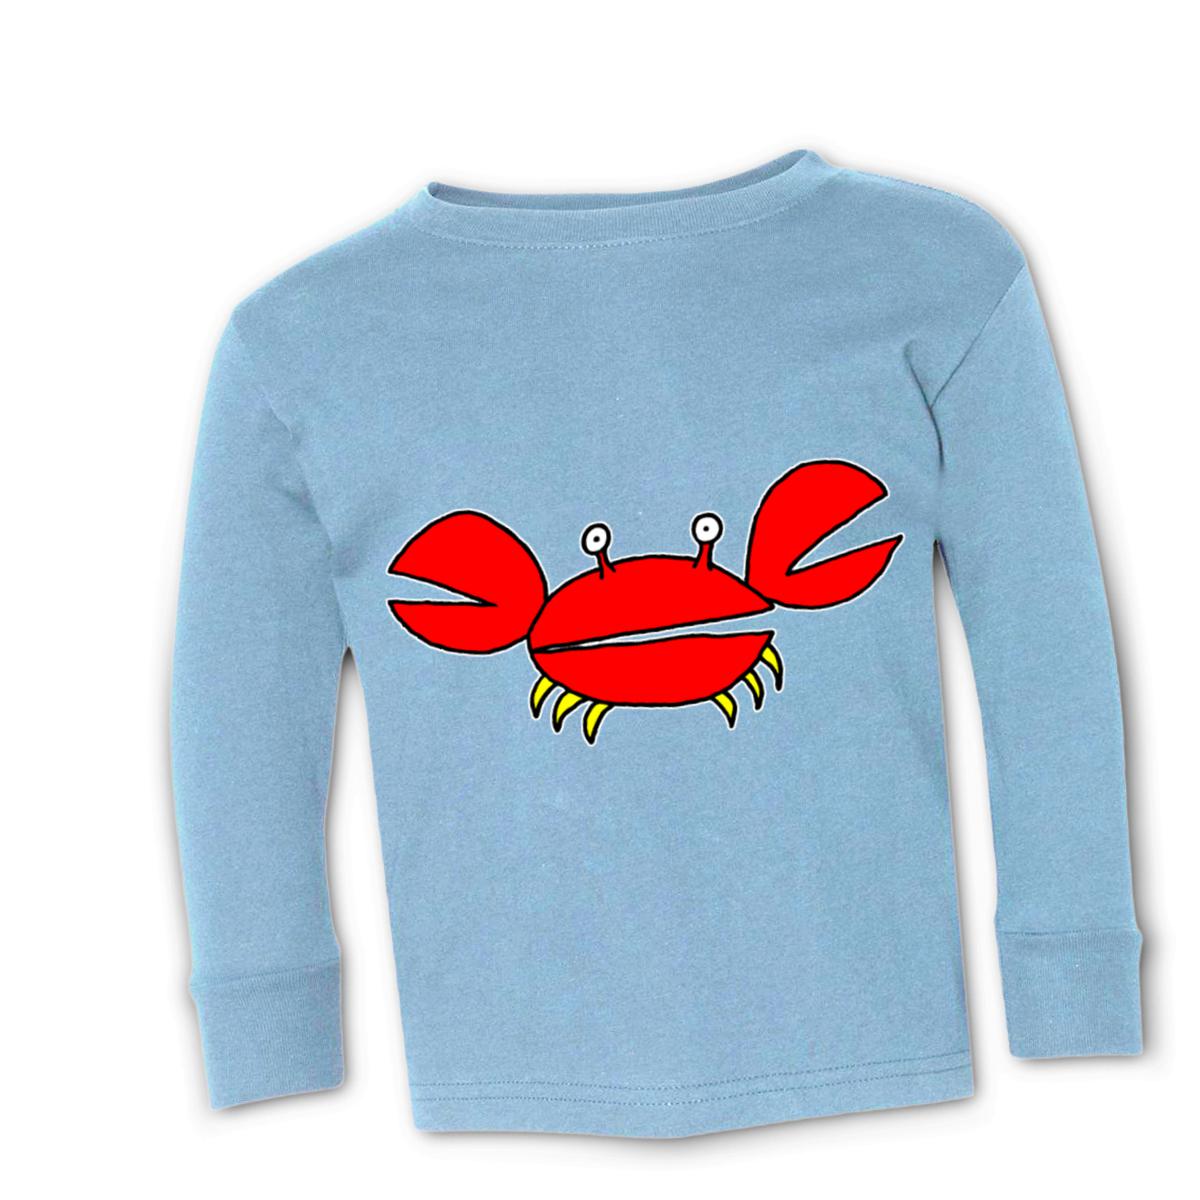 Crab Toddler Long Sleeve Tee 2T light-blue